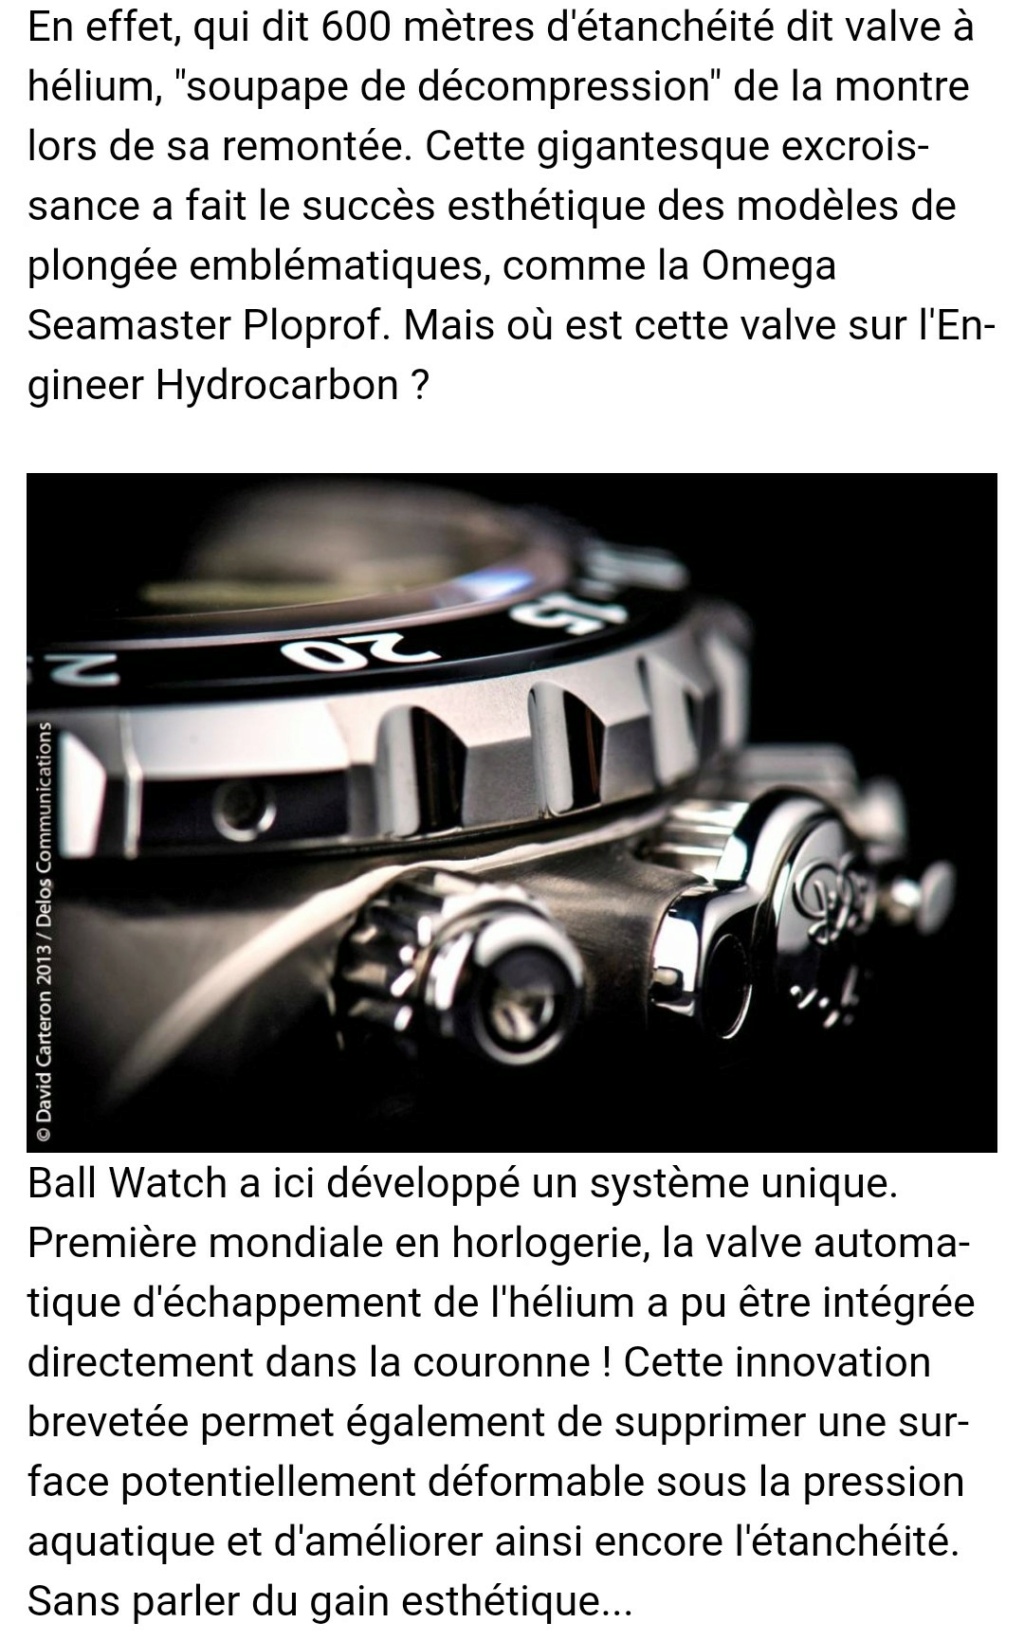 ball  watch - Ball watch co. (Hydrocarbure/hydrocrabon/engineer) avis plongeuses Screen53